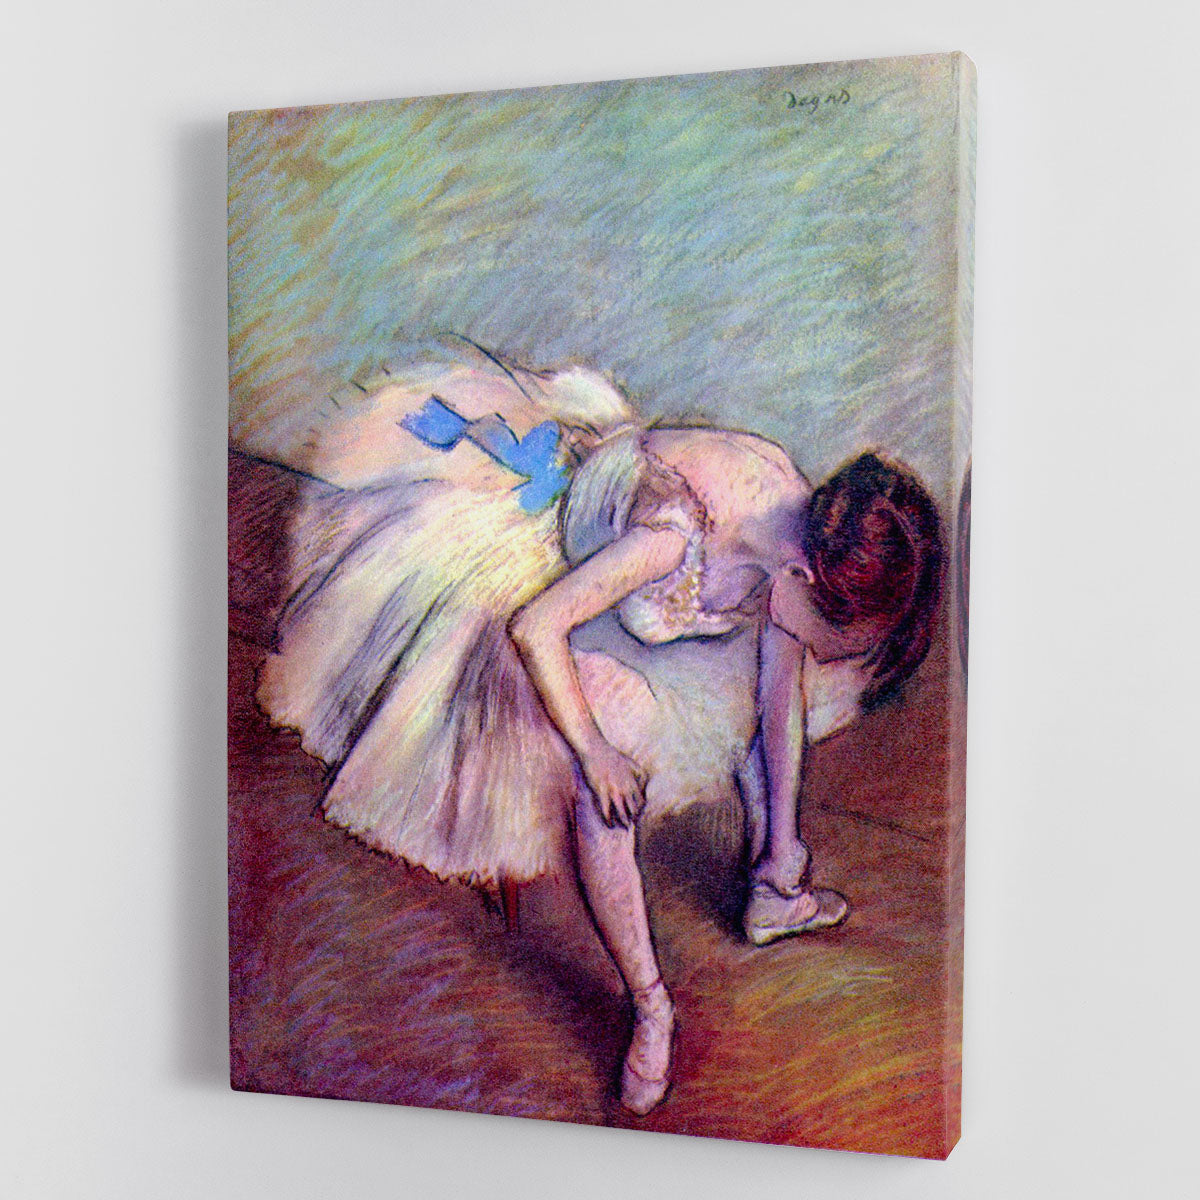 Dancer 2 by Degas Canvas Print or Poster - Canvas Art Rocks - 1